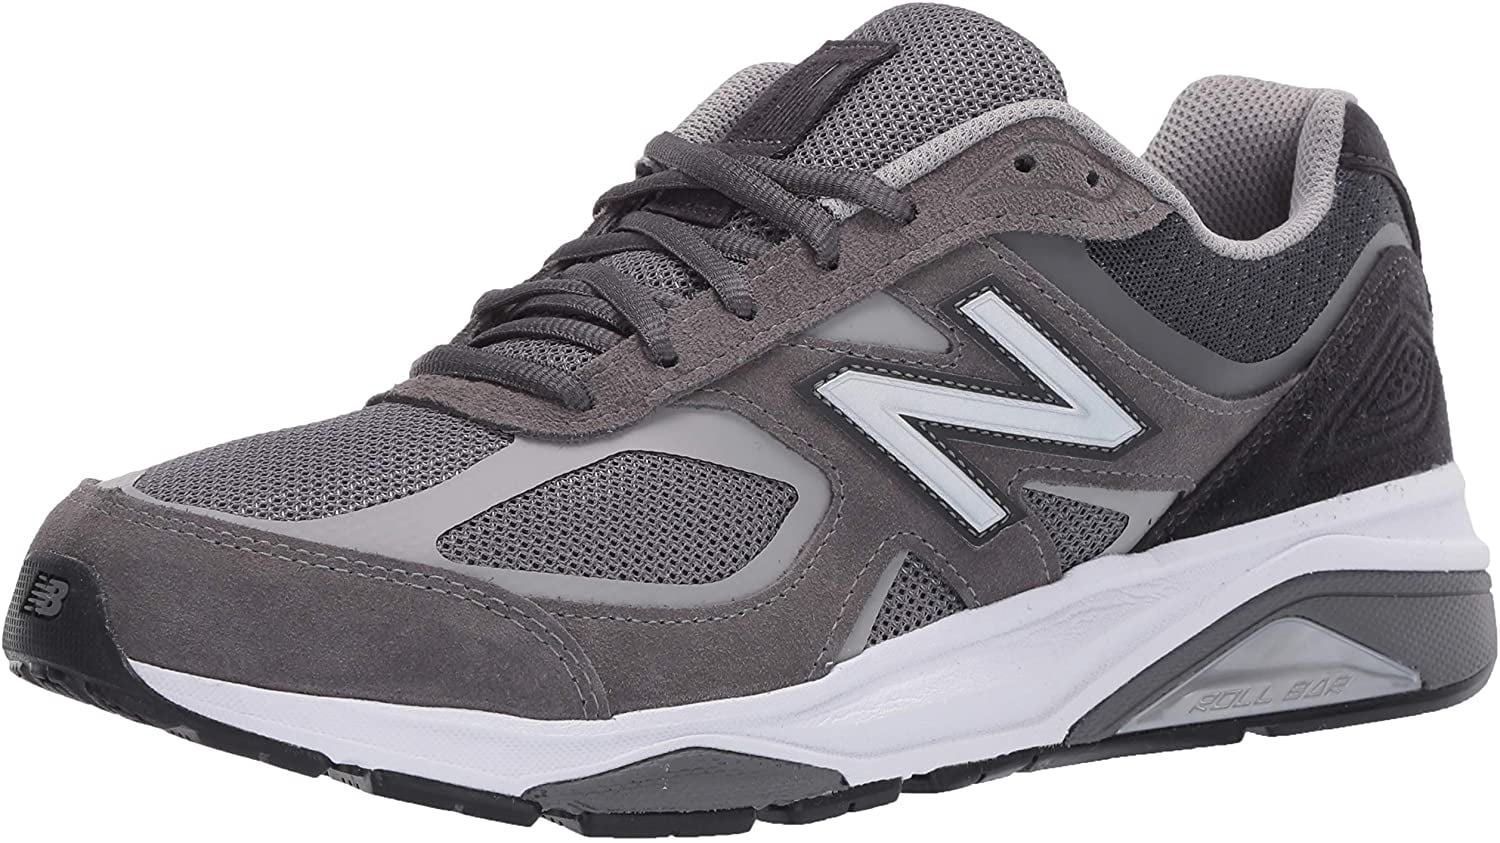 New Balance Men's 1540v3 Running Shoe, Grey/Black, 12 4E US | Walmart ...